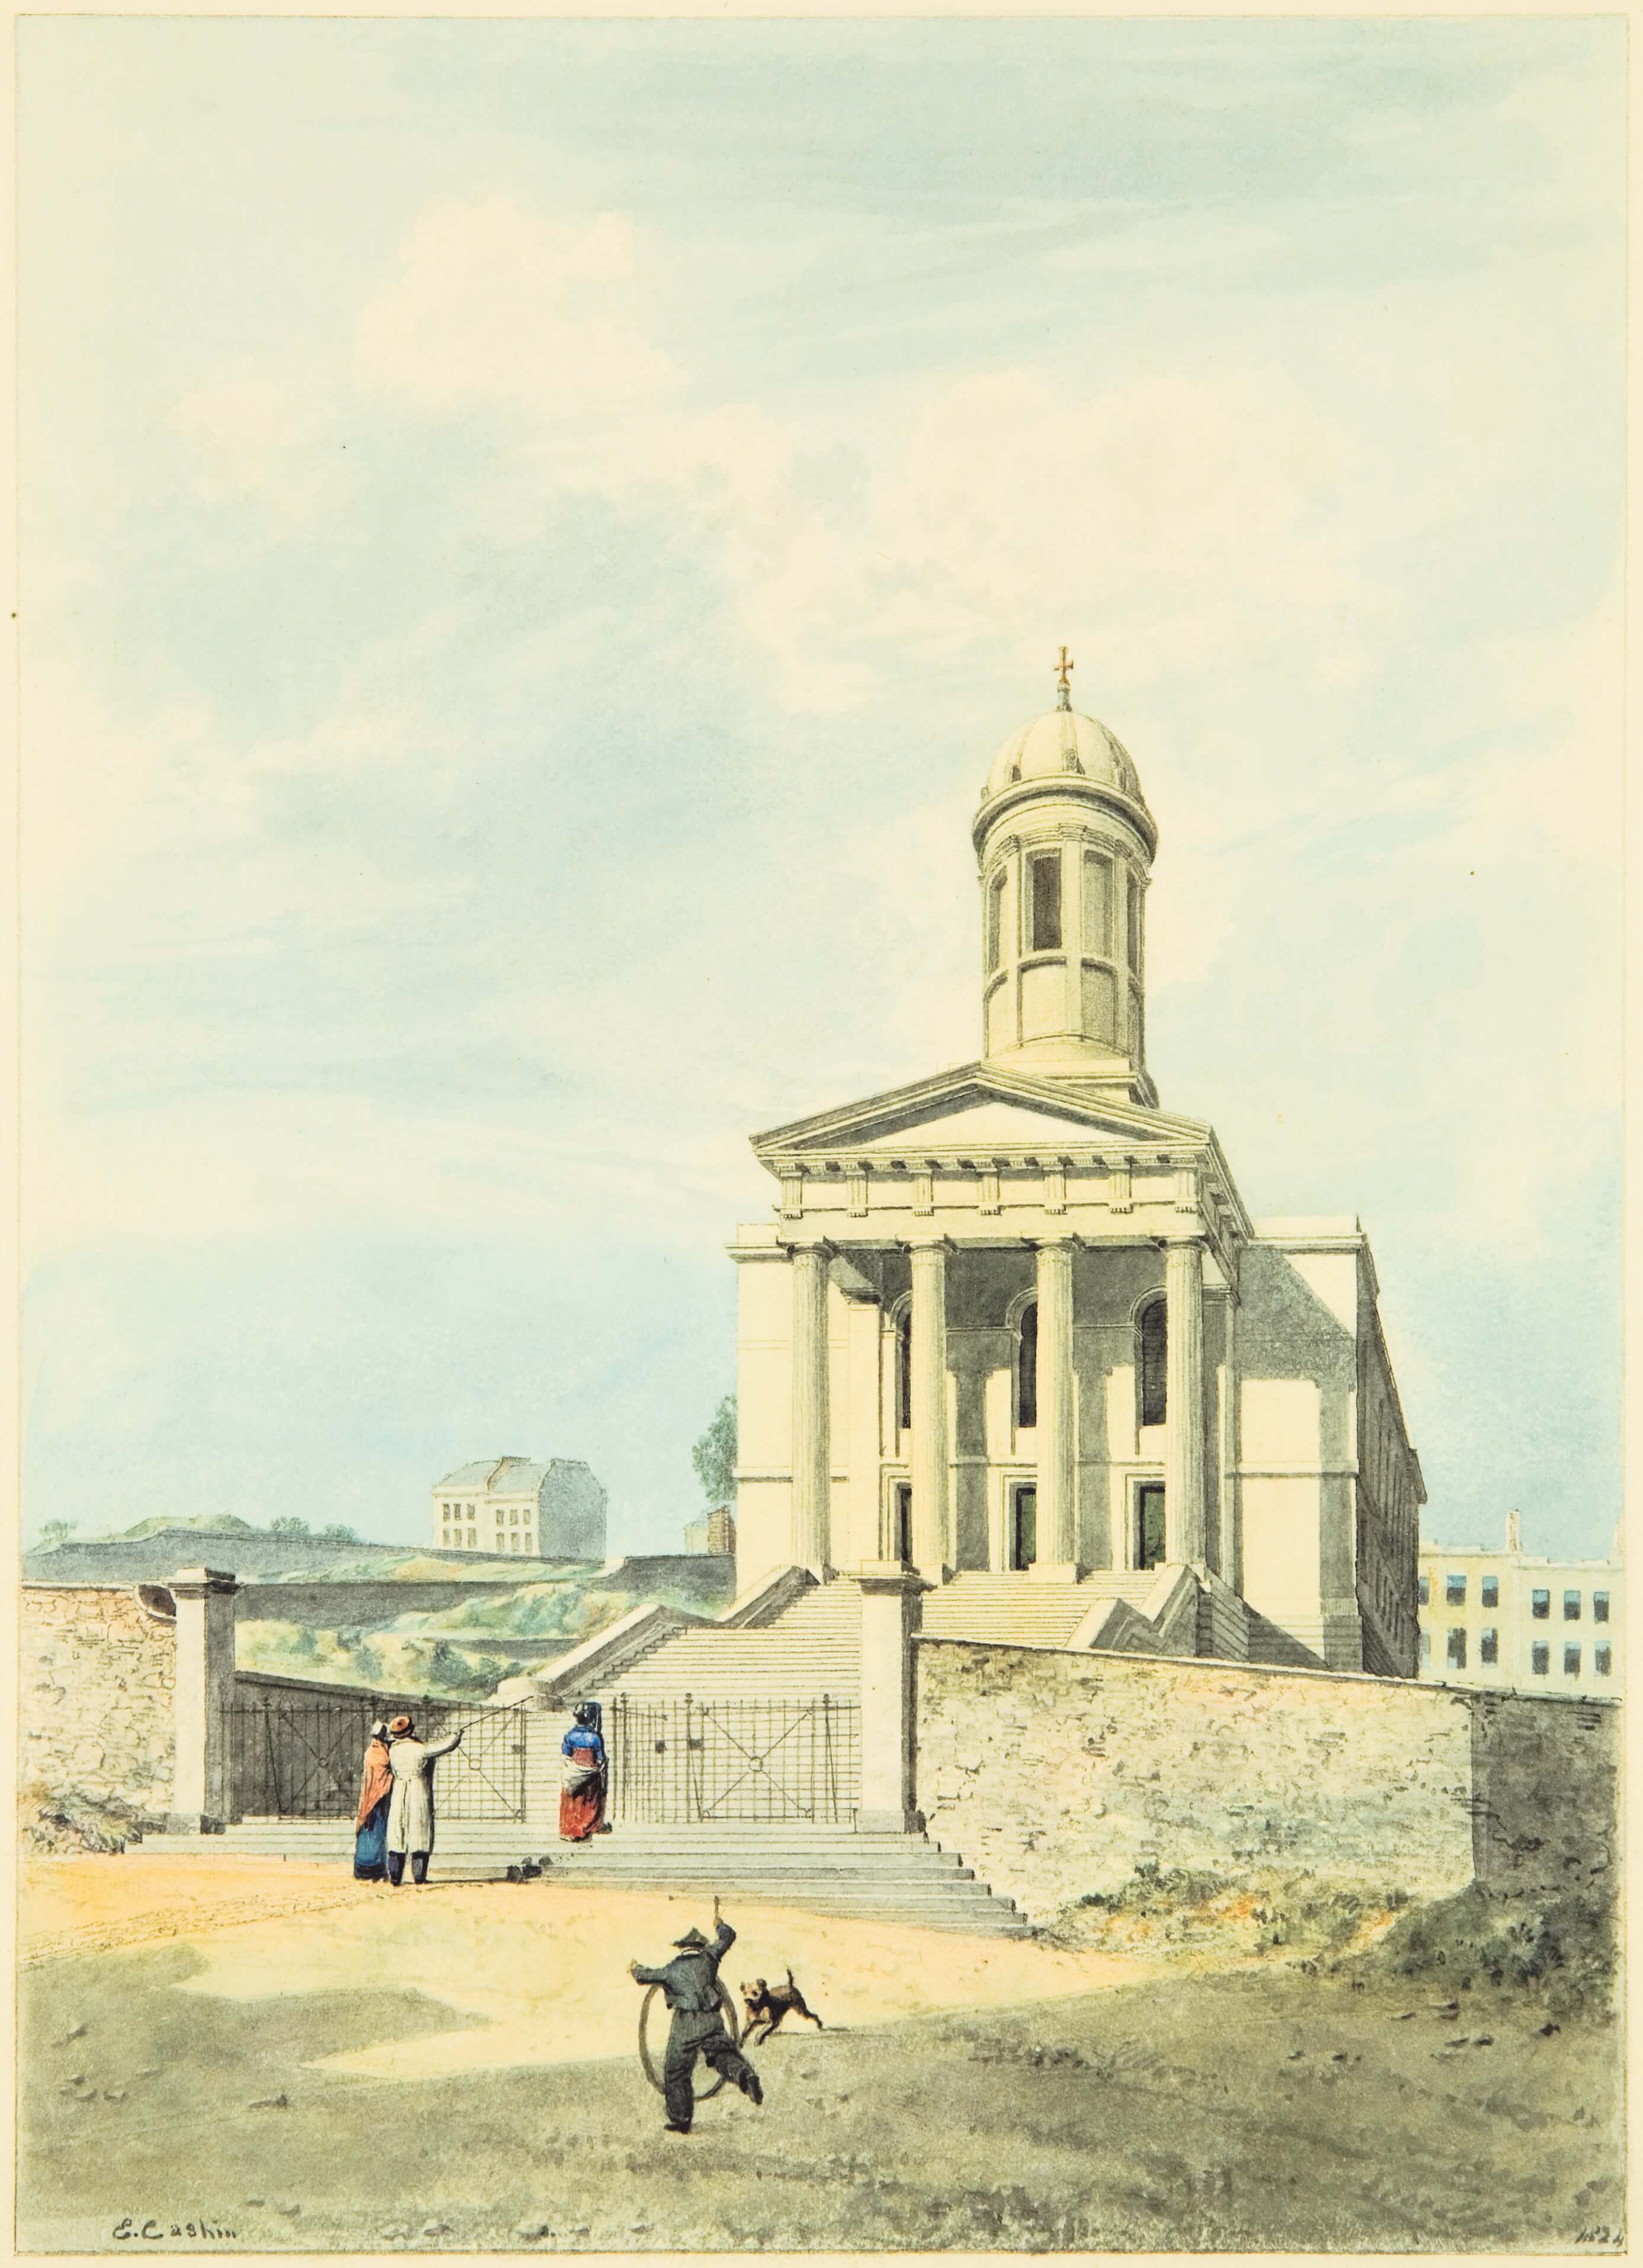 St George's Bristol historic building image